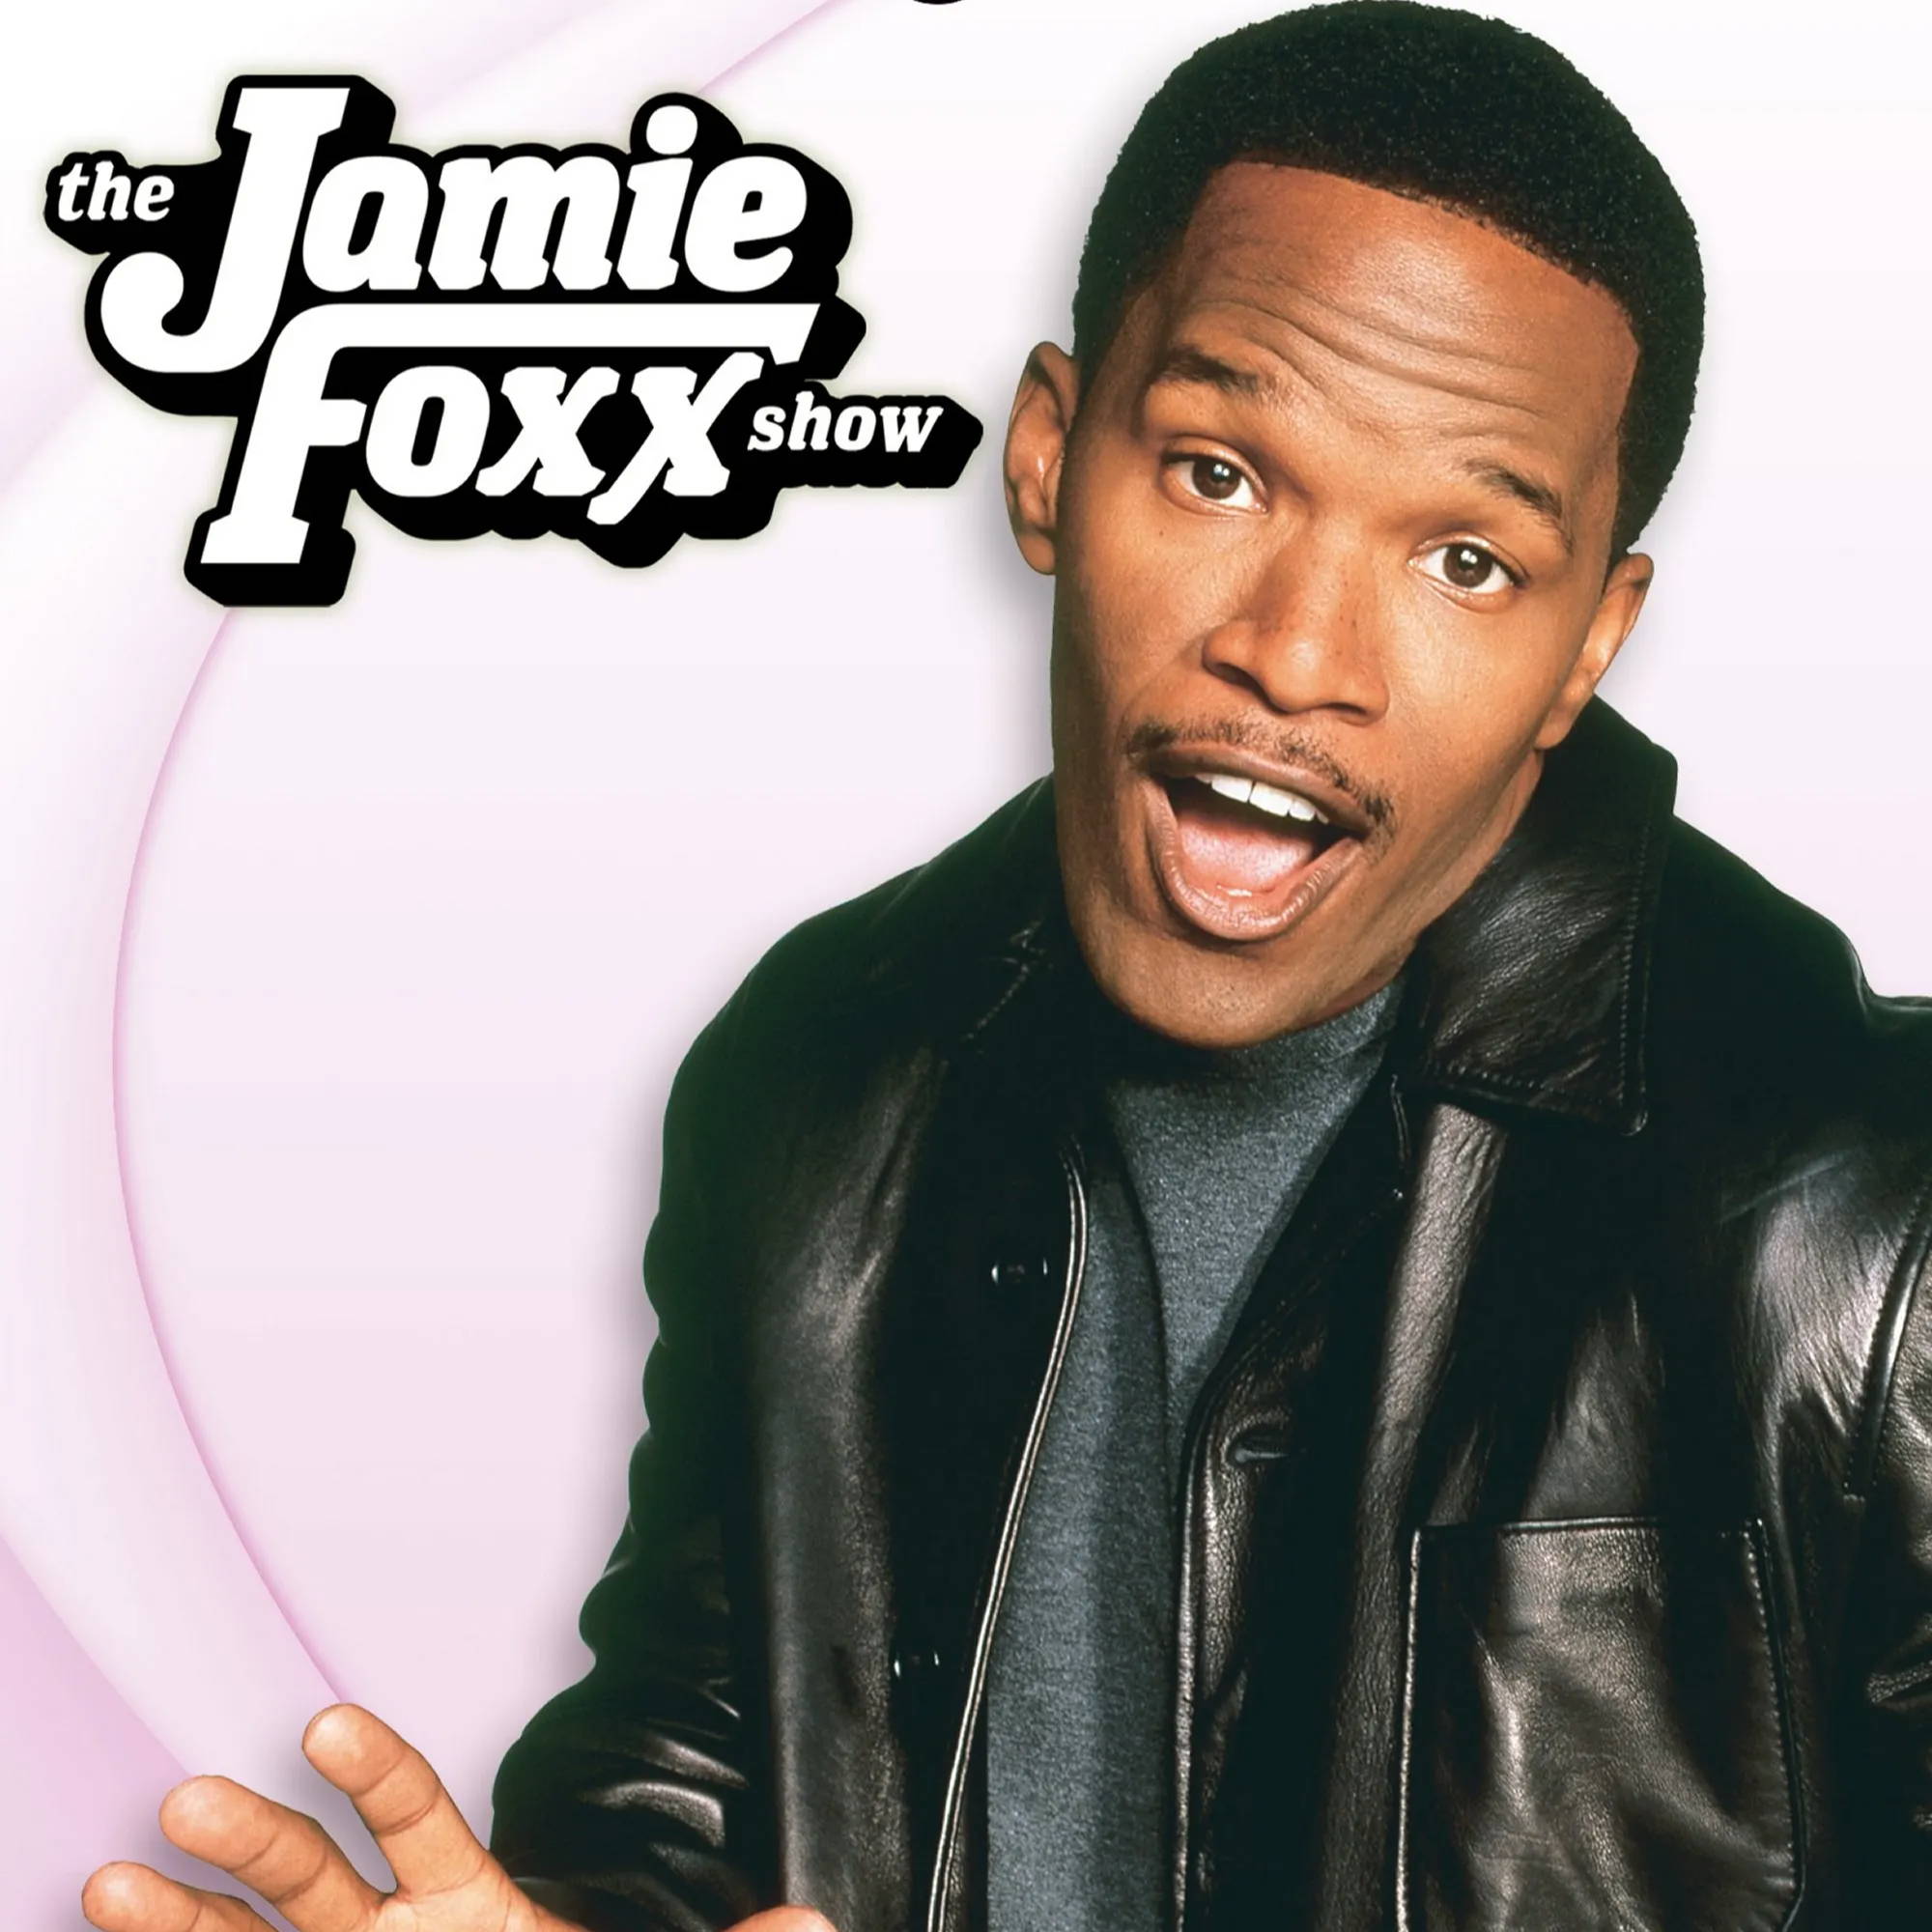 the jamie foxx show poster